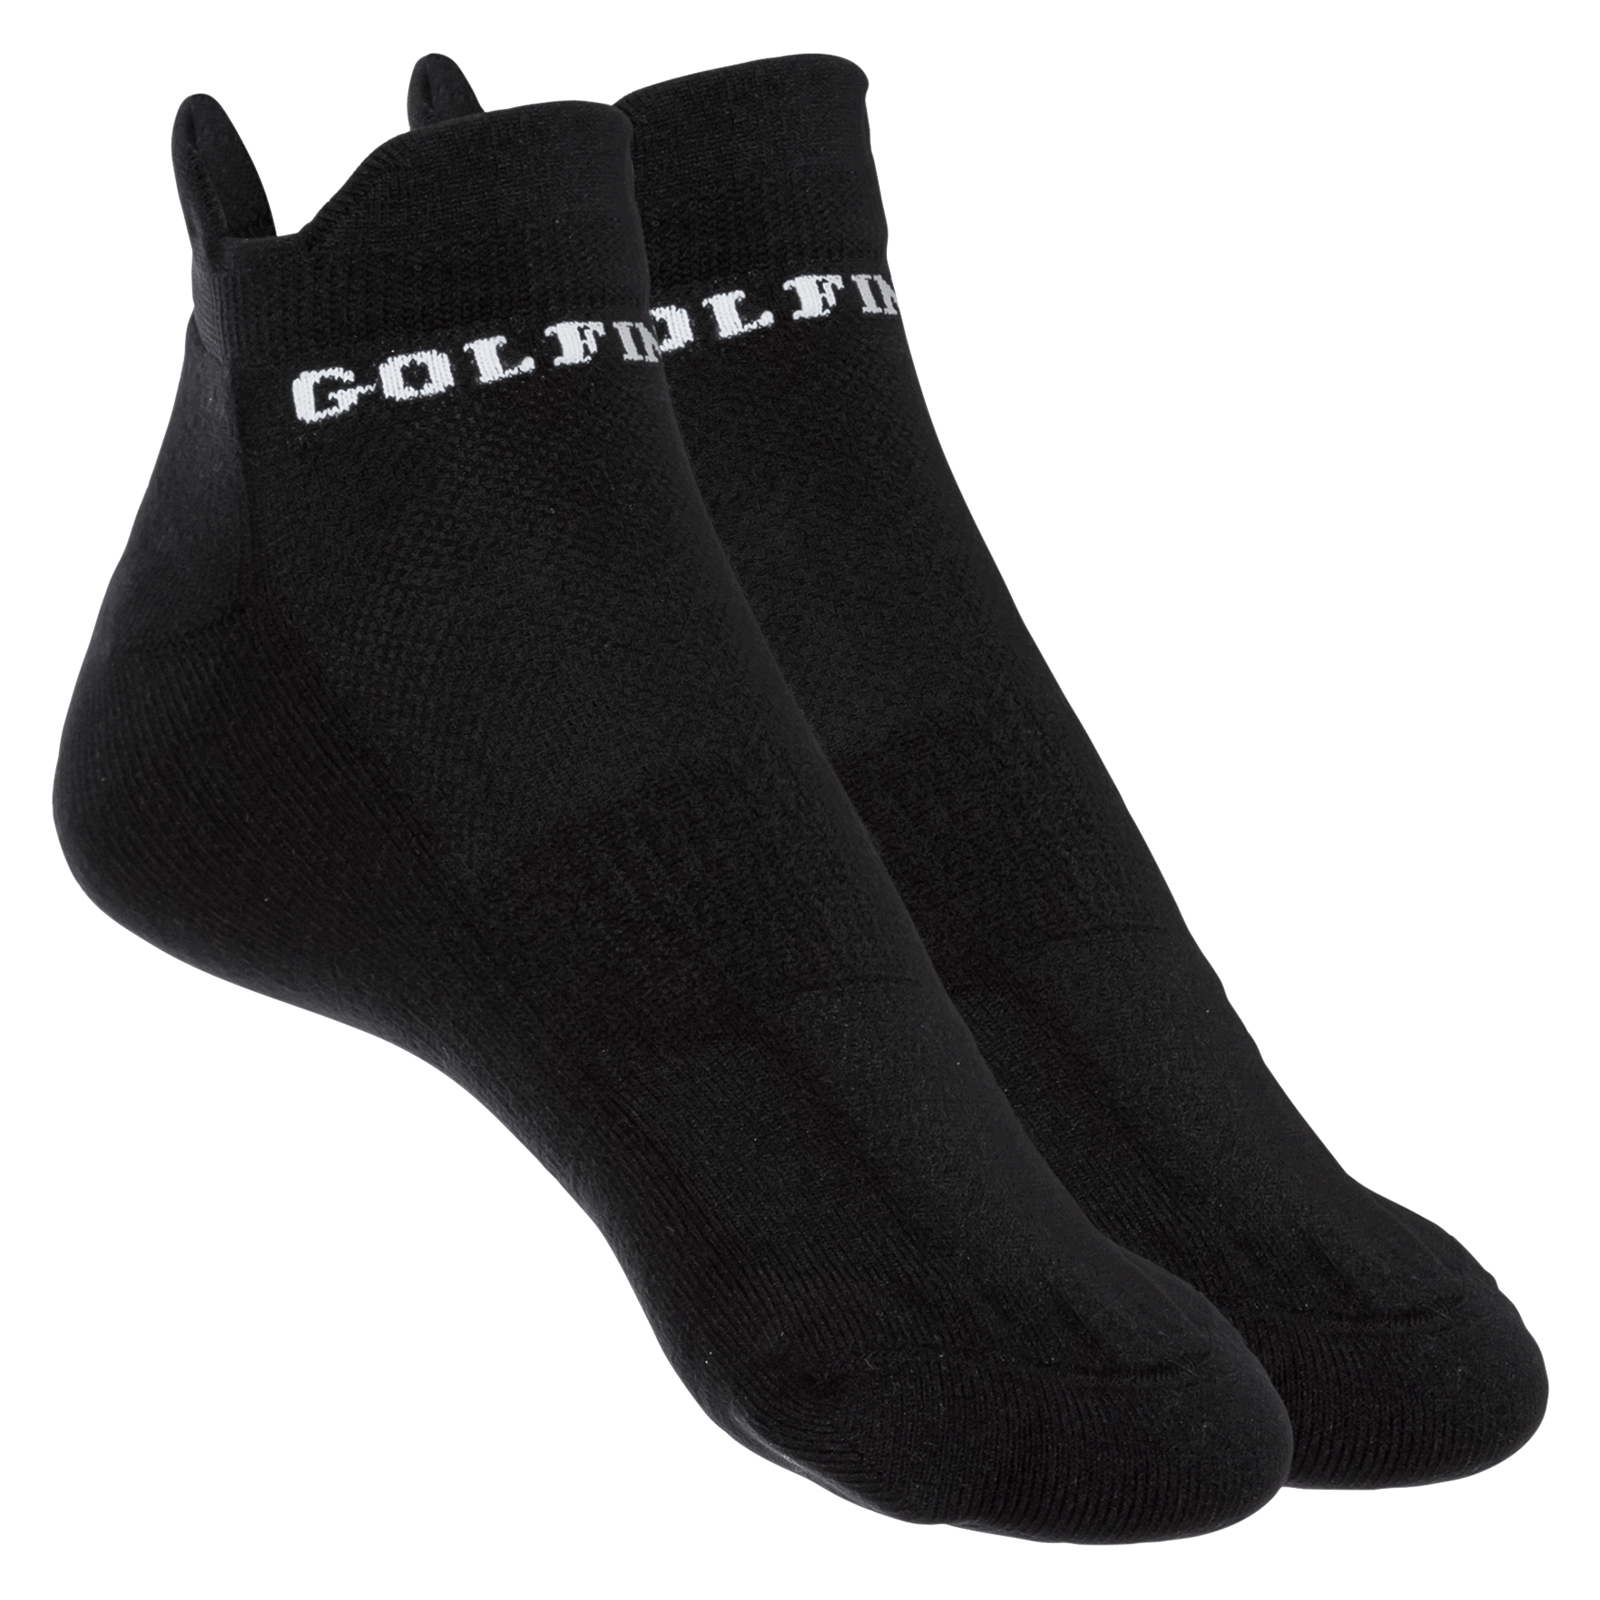 Men's cosy socks